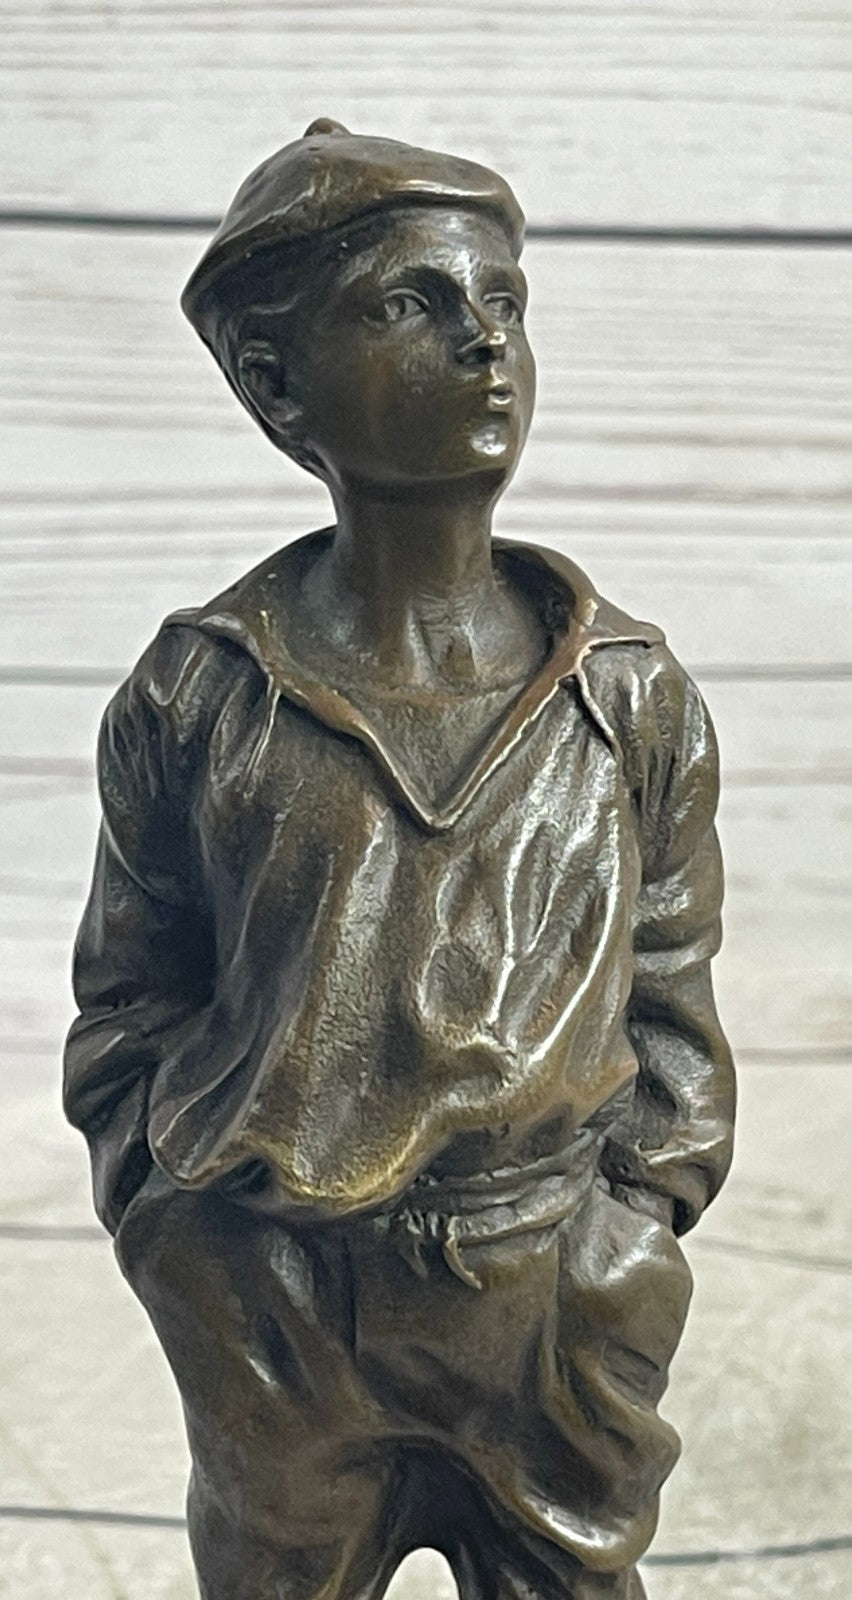 Vintage Signed Szczeblewski Bronze Sculpture of a Whistling German Boy - Fine Detailed Art